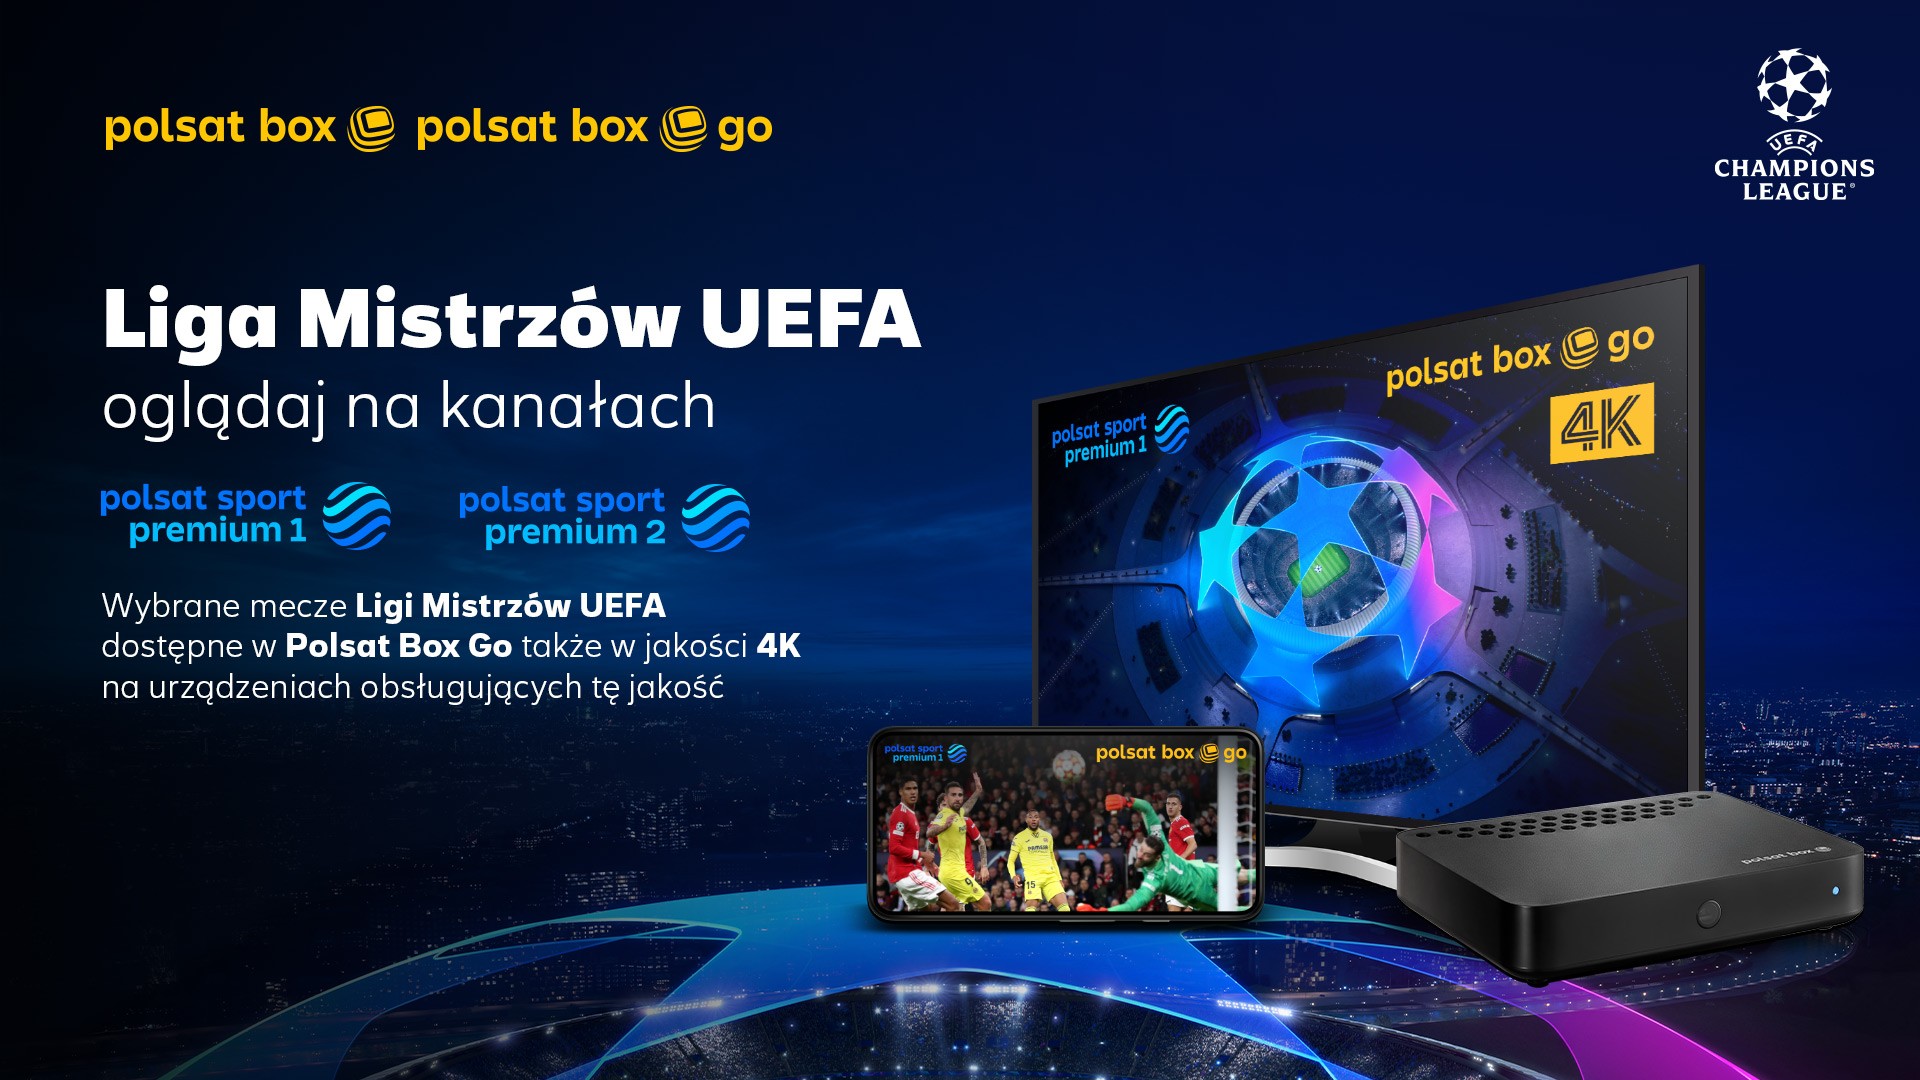 polsat sport premium 2 live stream